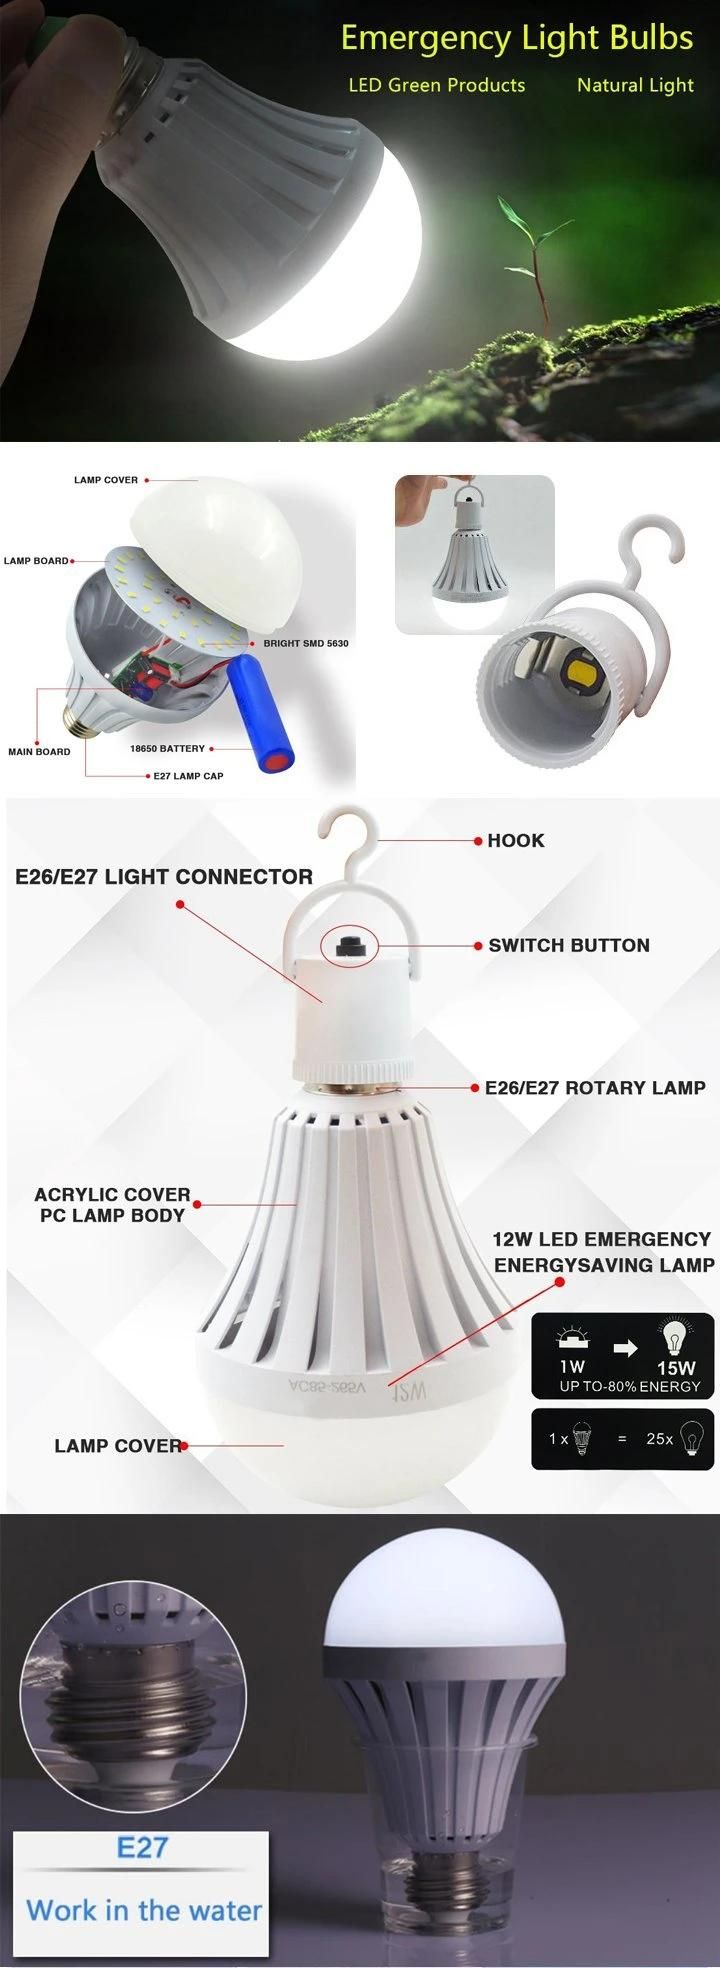 Wholesale Cheap Price LED Light Bulb 5W 7W 9W 12W LED Lamp E27 Base Emergency Bulb